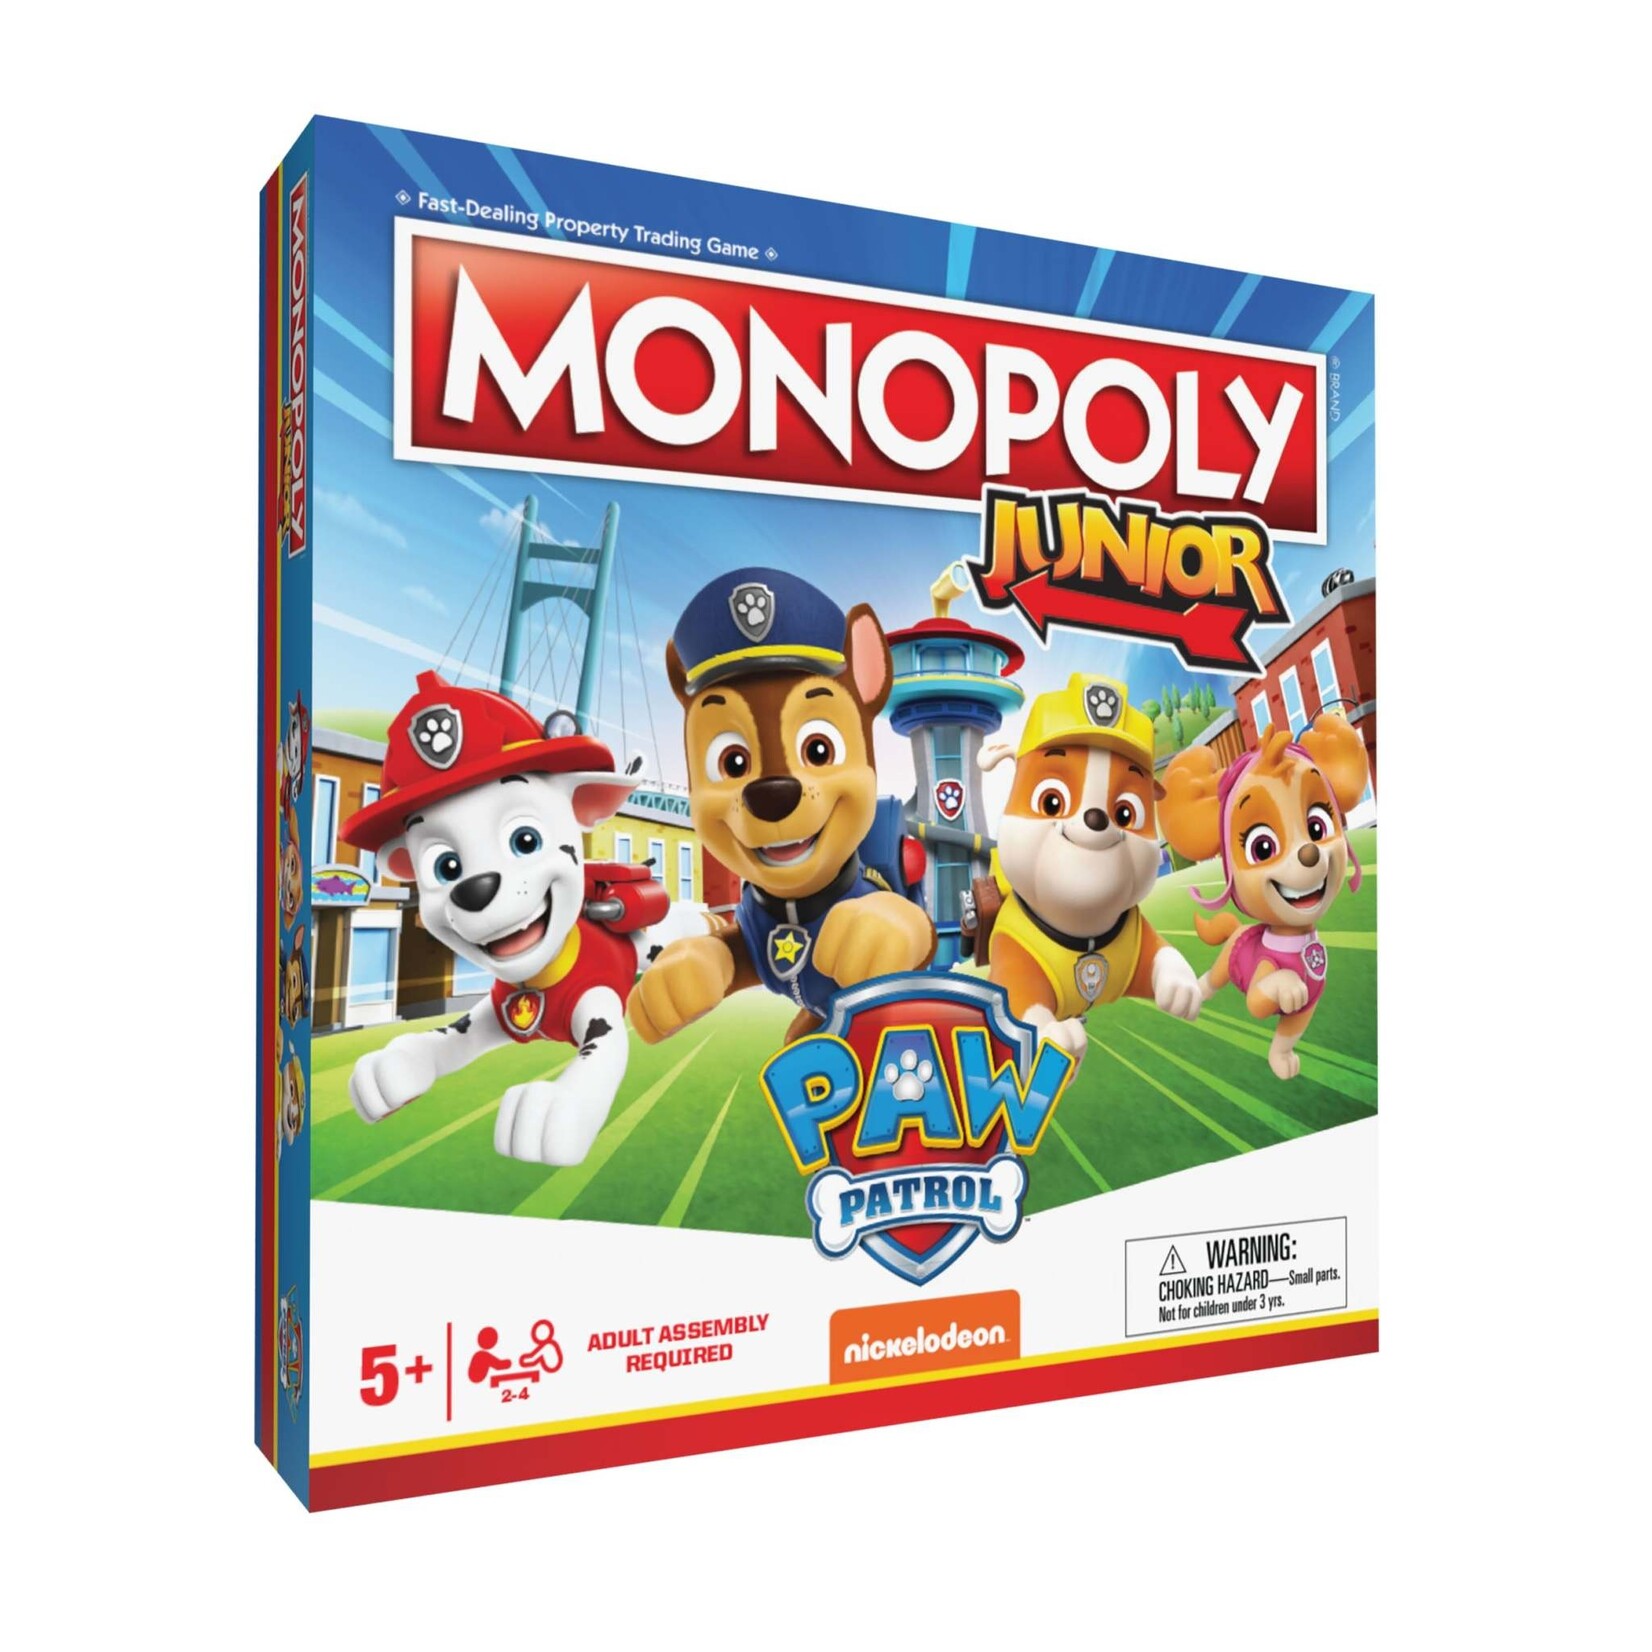 The Op Monopoly Junior: Paw Patrol